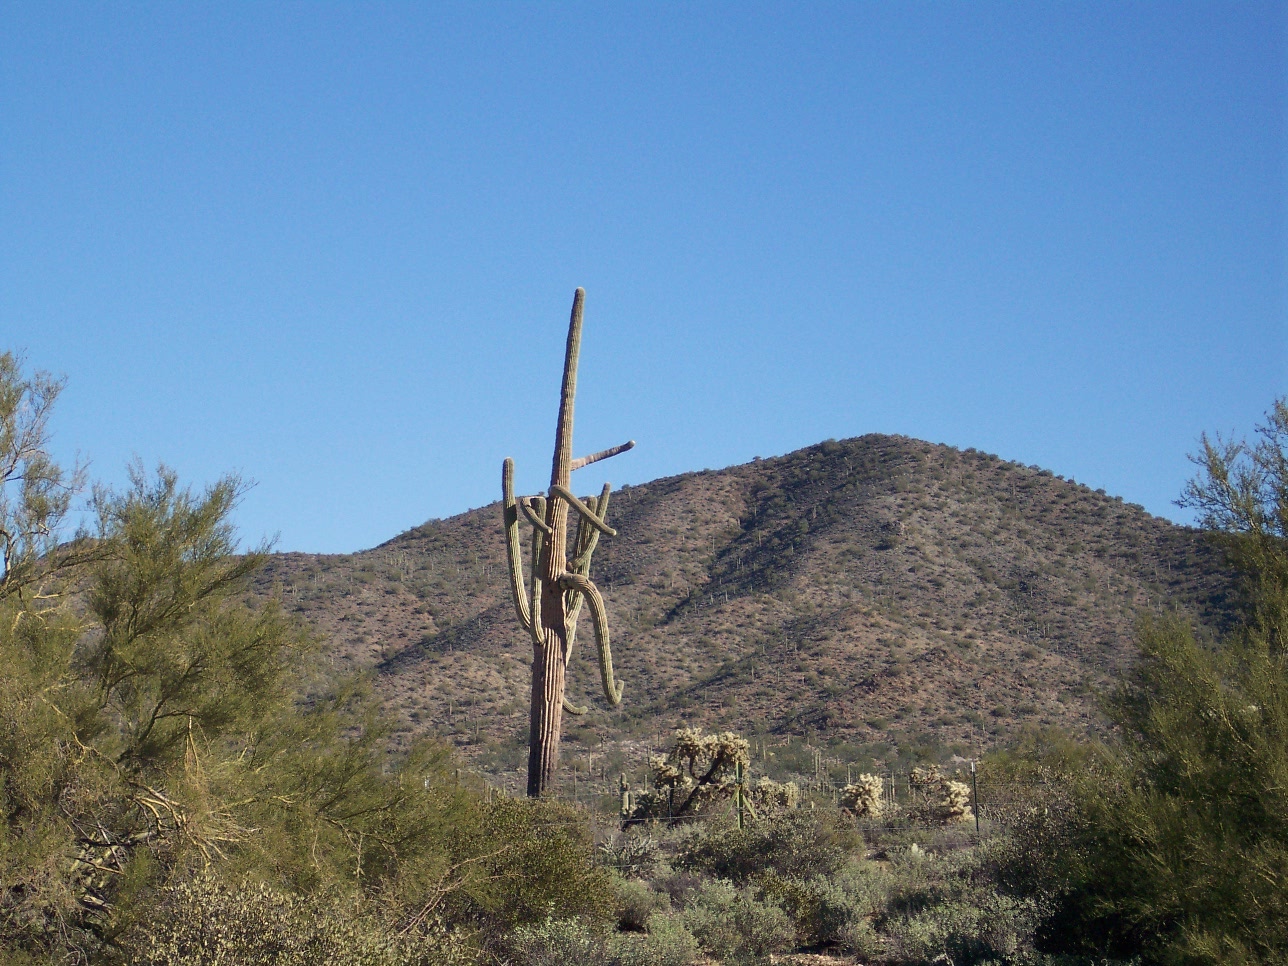 A lone saguara reaches to the sky against an Arizona mountain backdrop